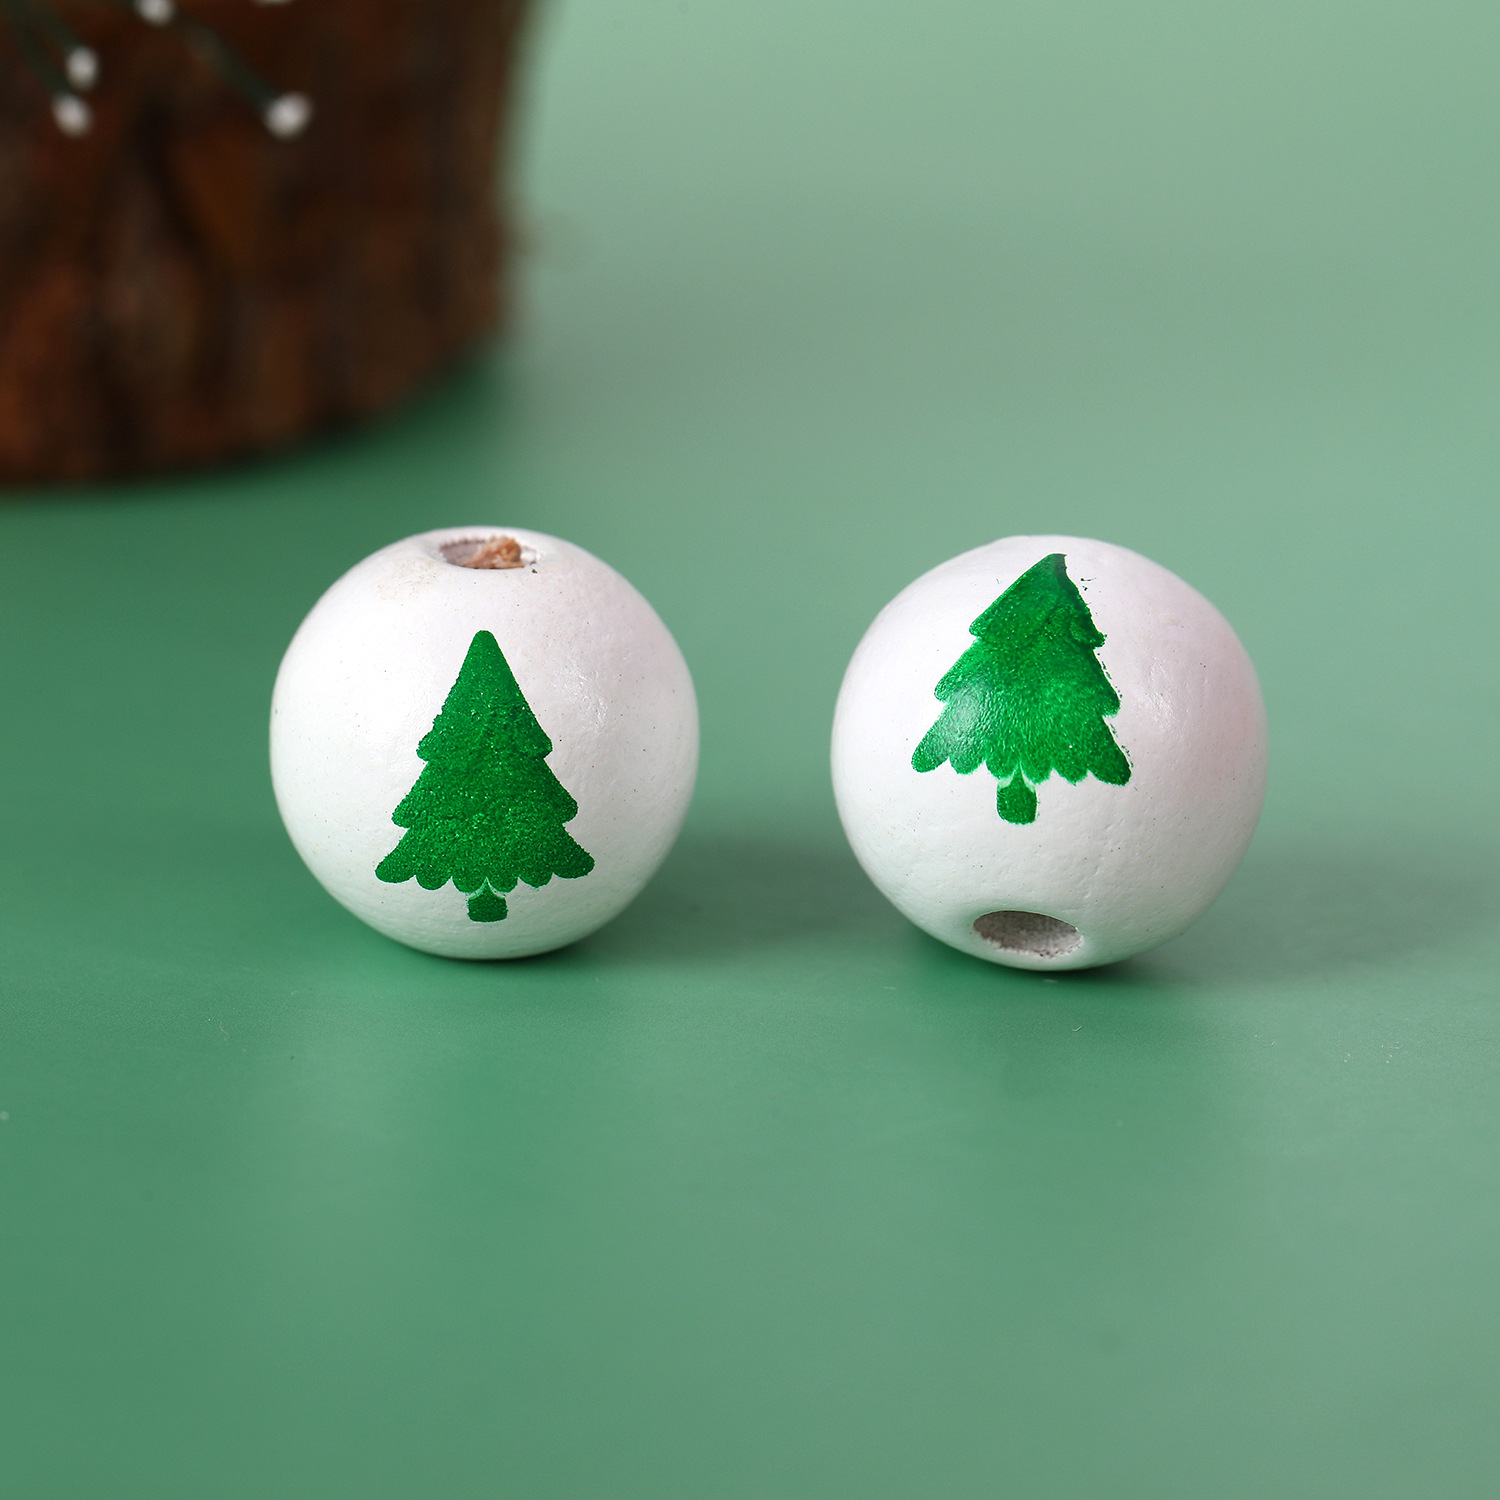 4:Green Christmas tree printed on white